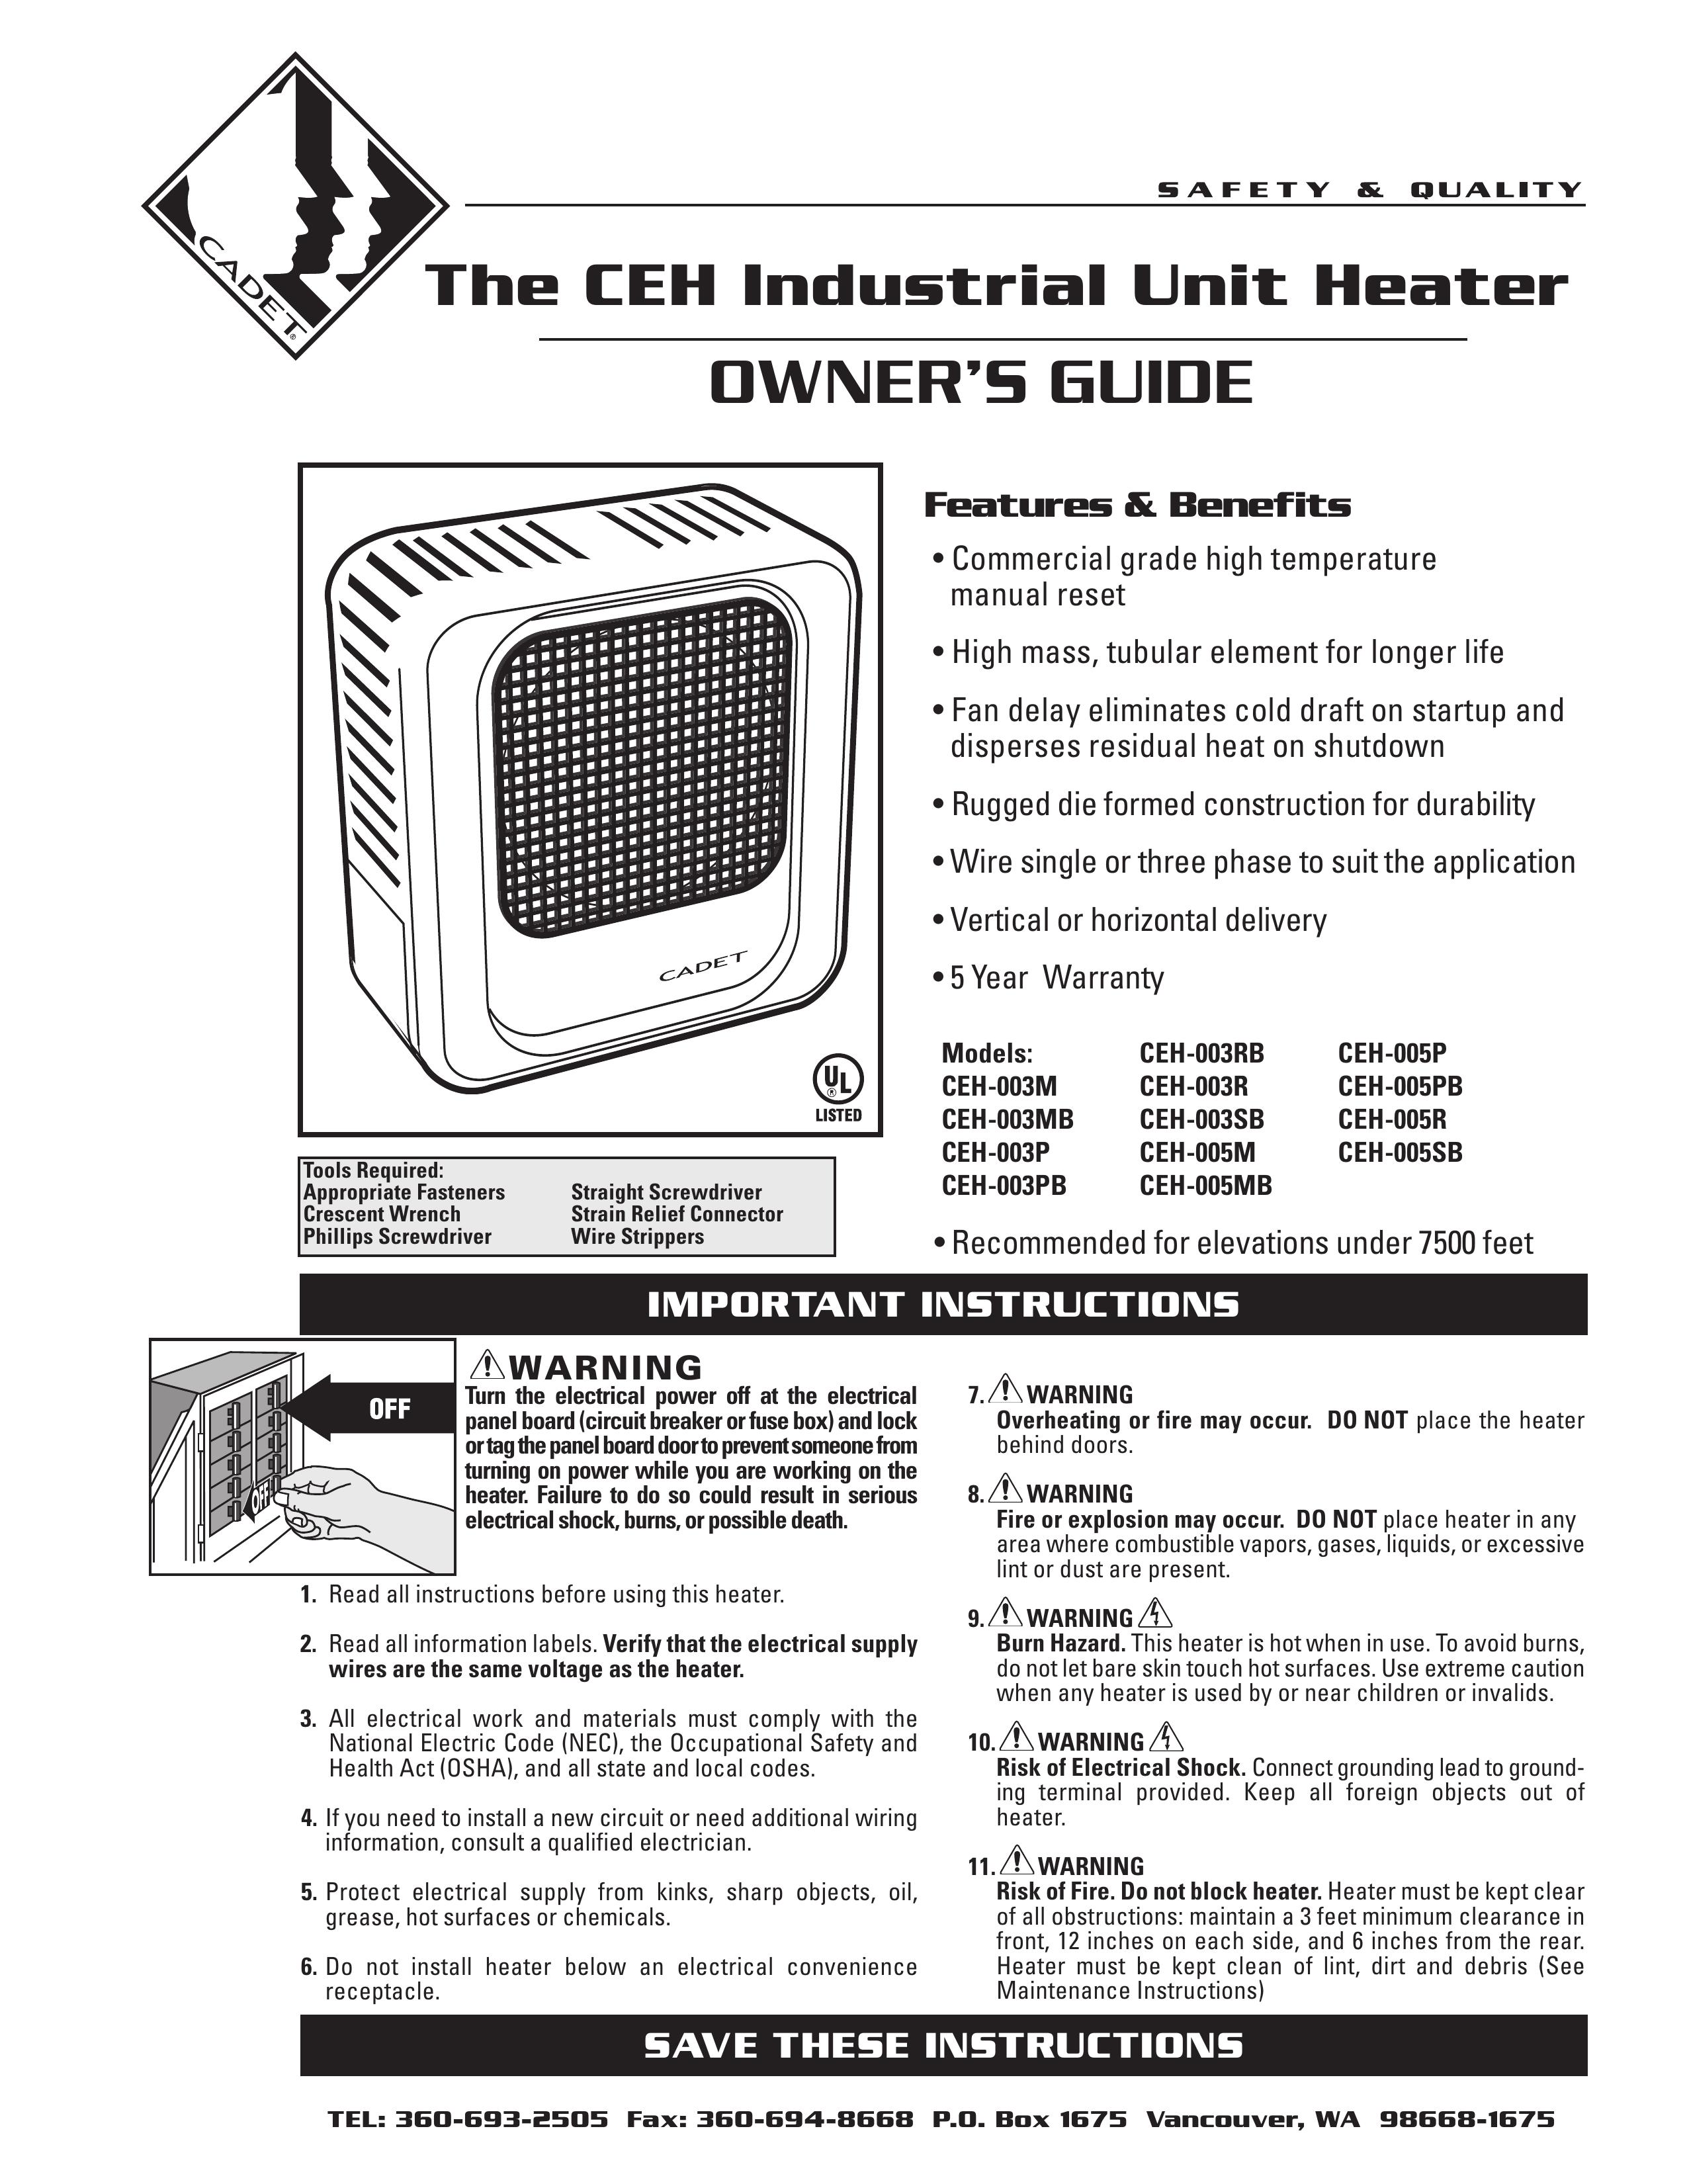 Cadet CEH-003RB Patio Heater User Manual